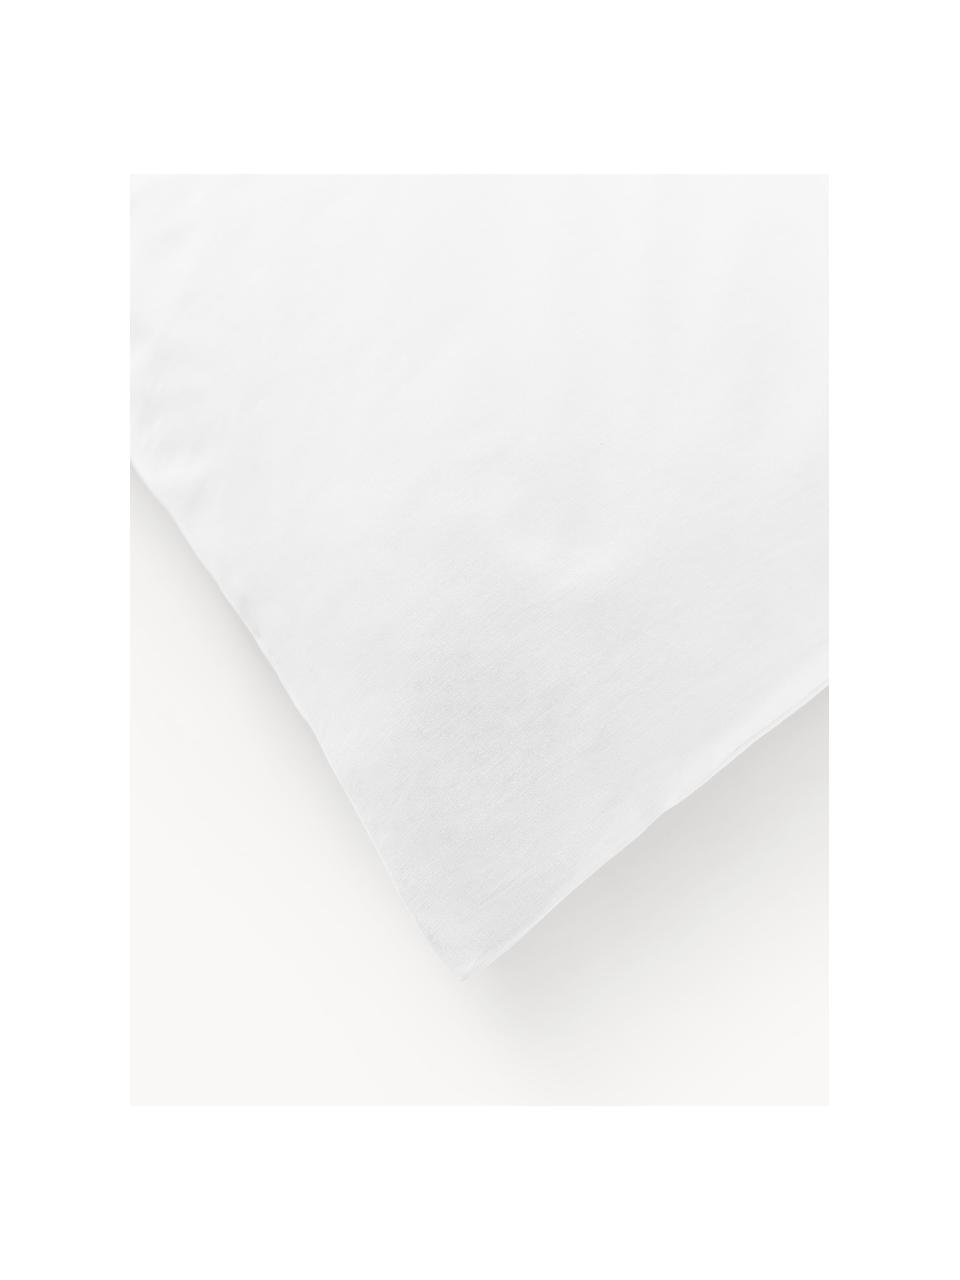 Funda de almohada de percal Elsie, Blanco, An 50 x L 70 cm